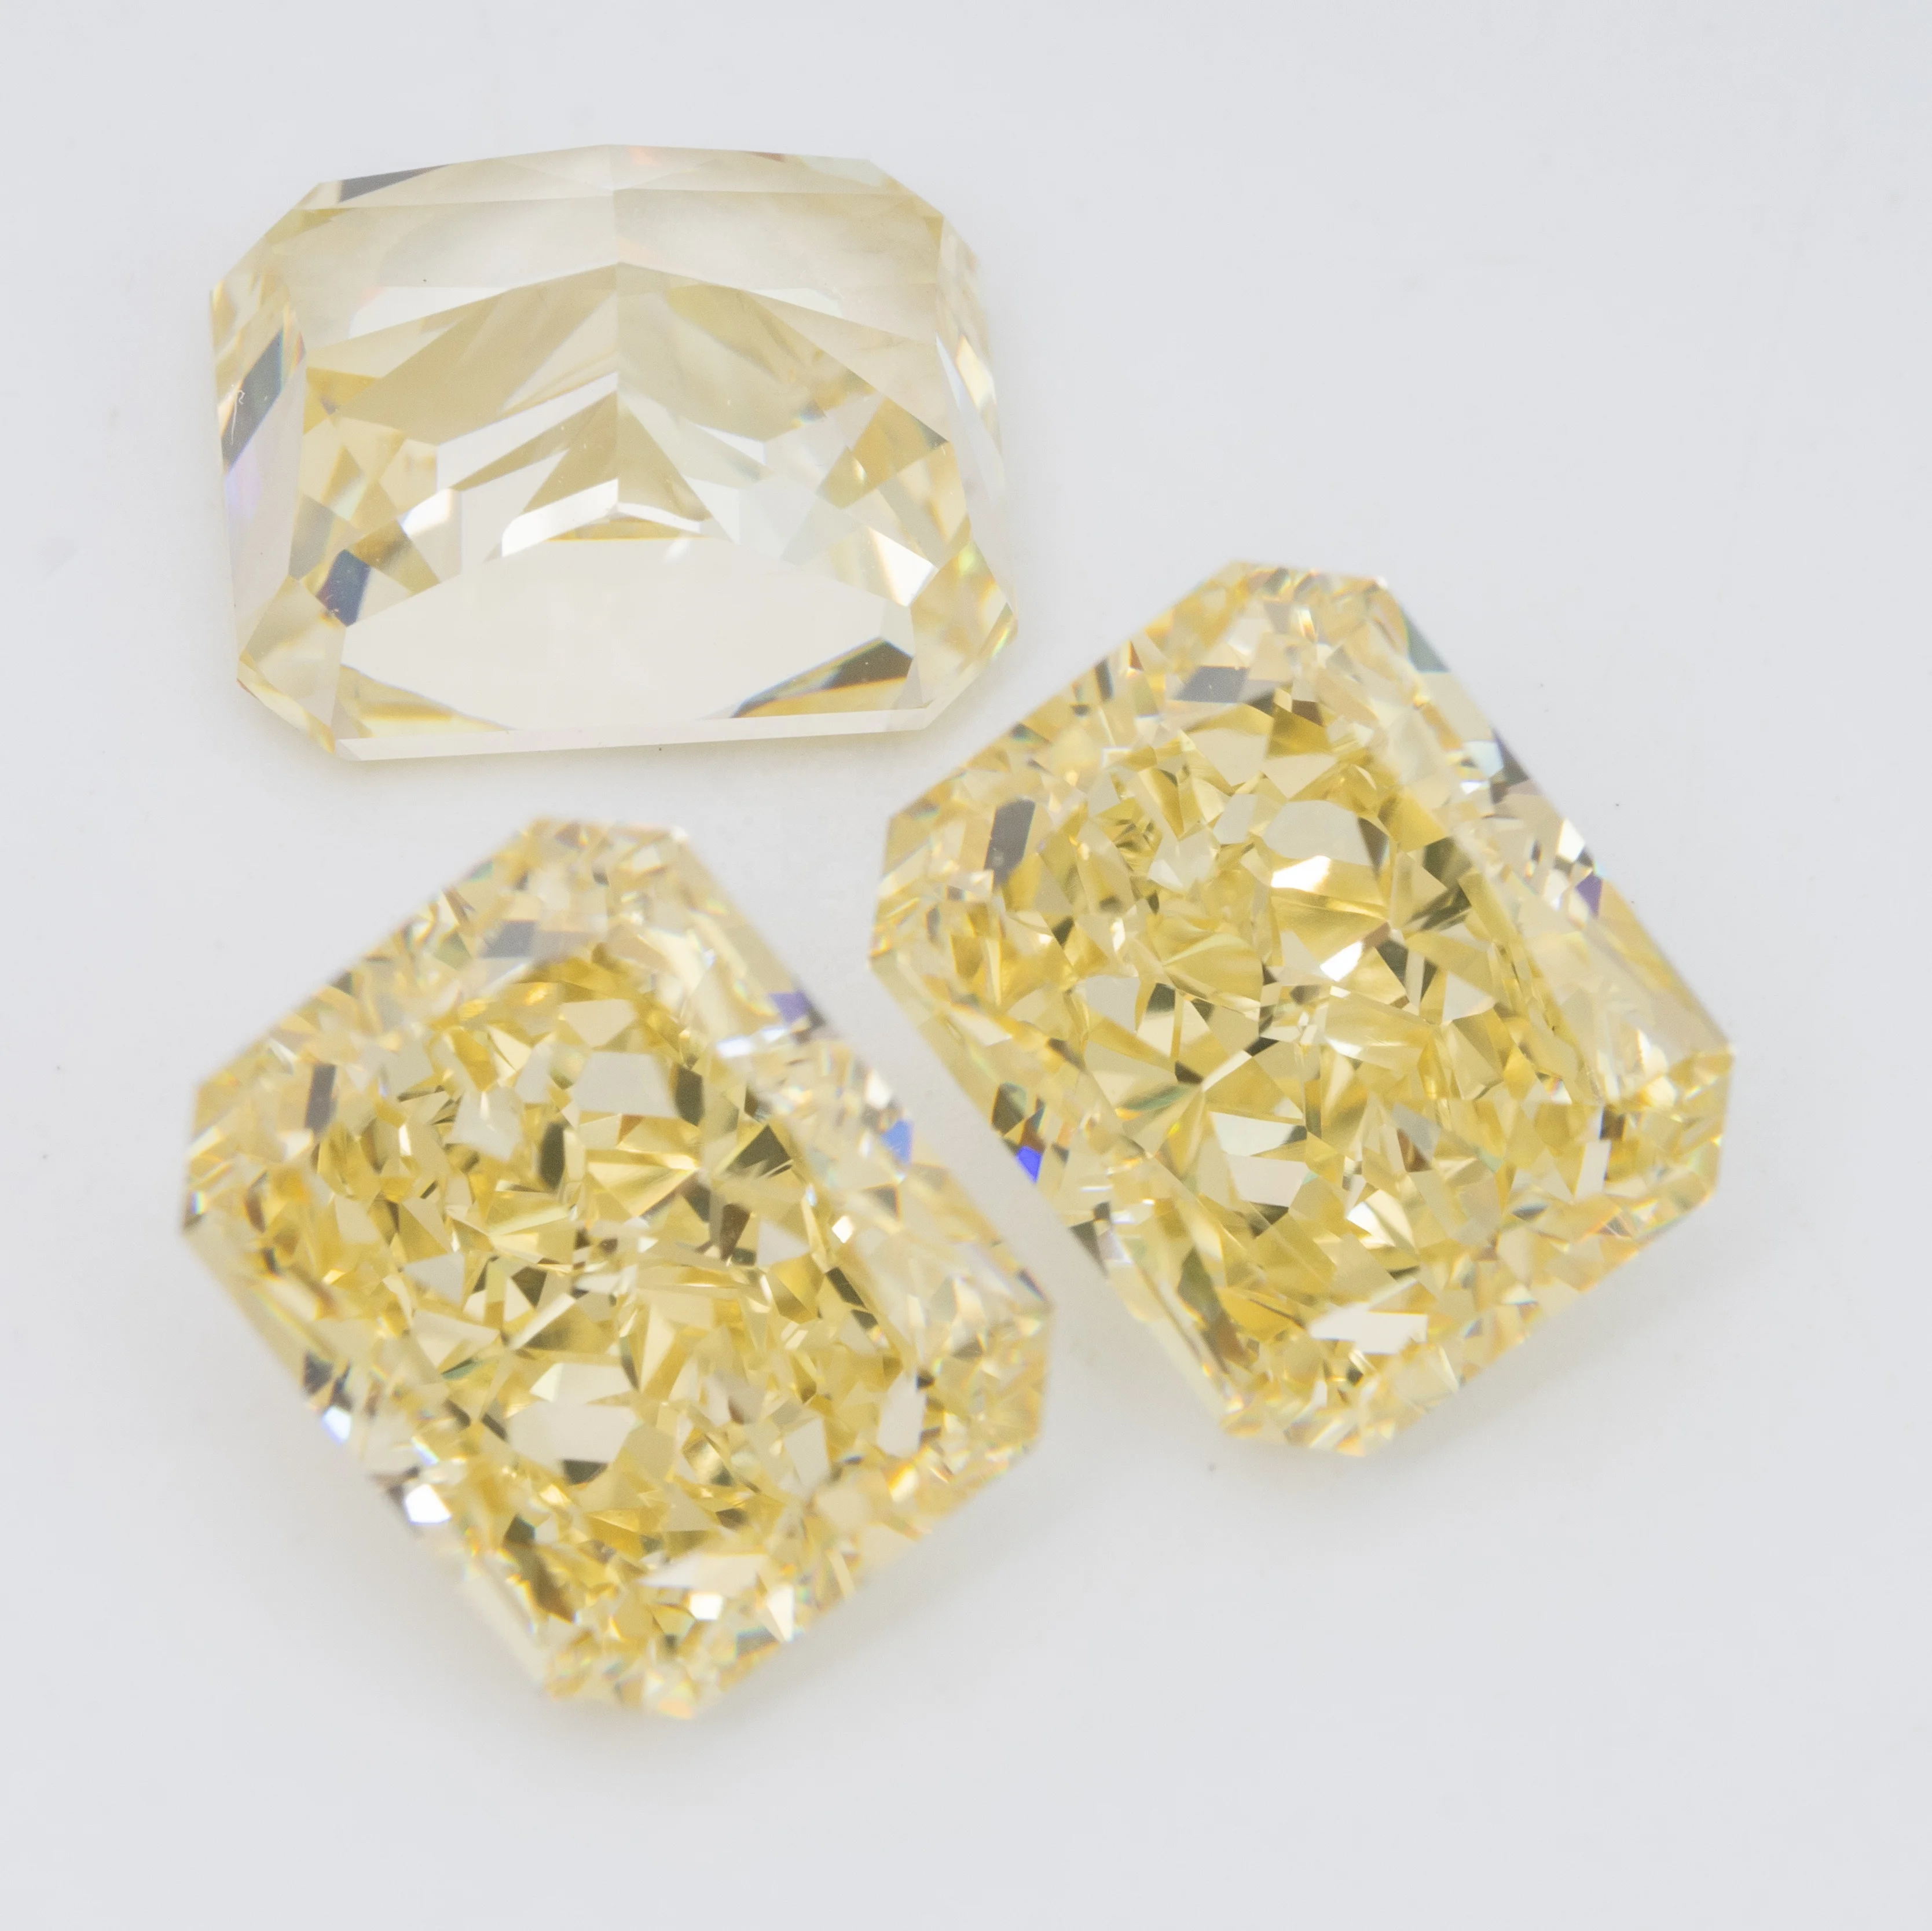 Octagon Ice Crushed Cut Light Yellow Color CZ Stones Loose Gemstones Cubic Zirconia